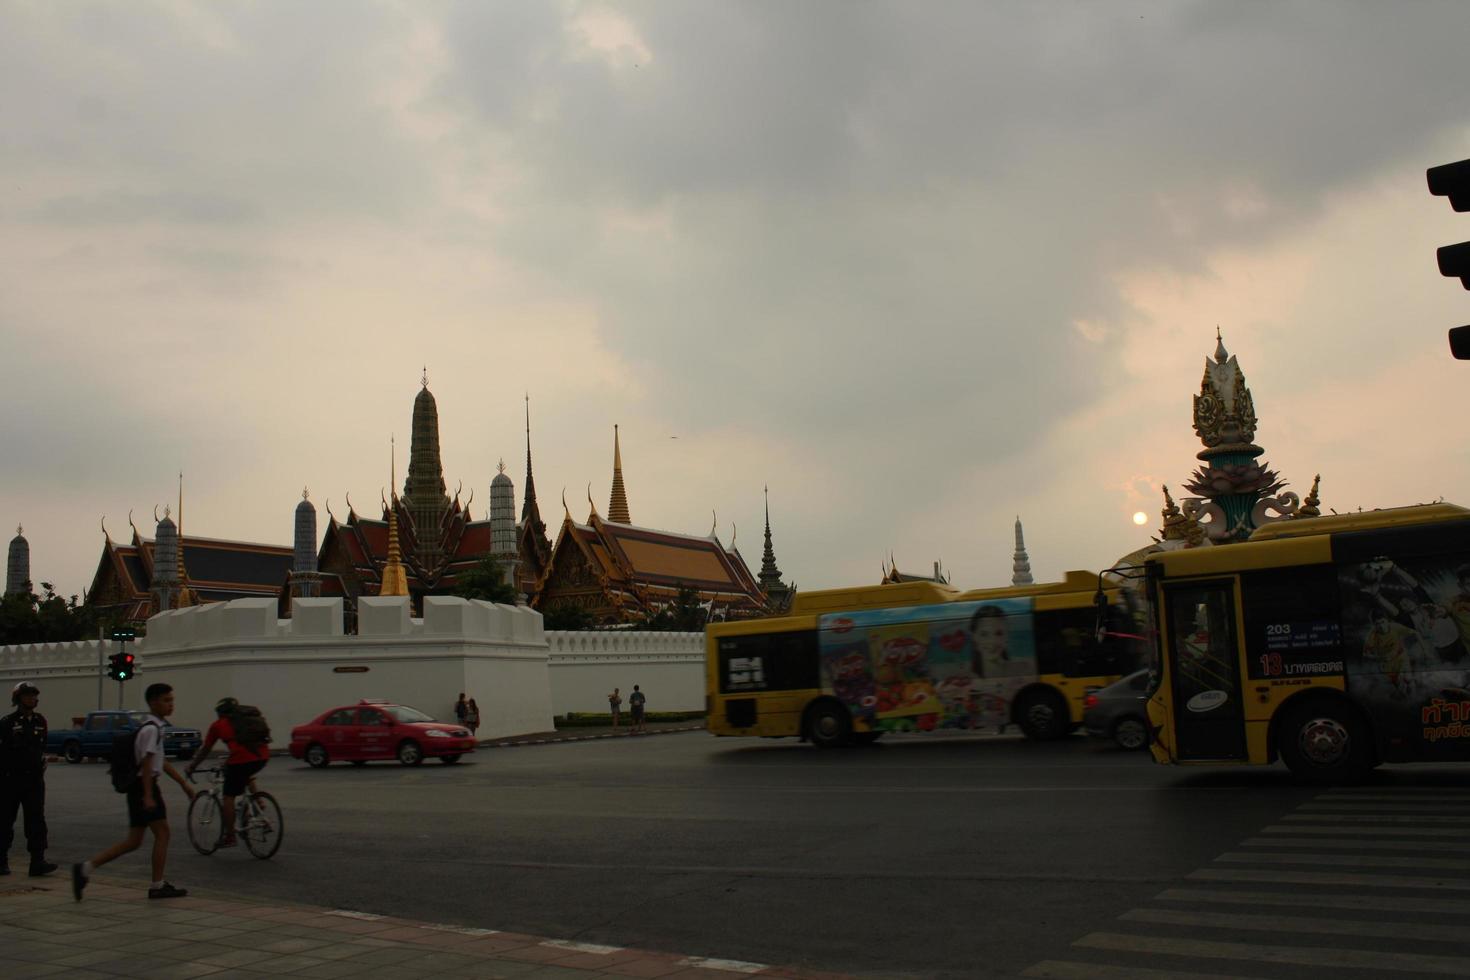 bangkokthailand16 februari 2016turister reser till det stora palatset solnedgången kanske dess bangkoks nattliv den 16 februari 2016 i thailand. foto